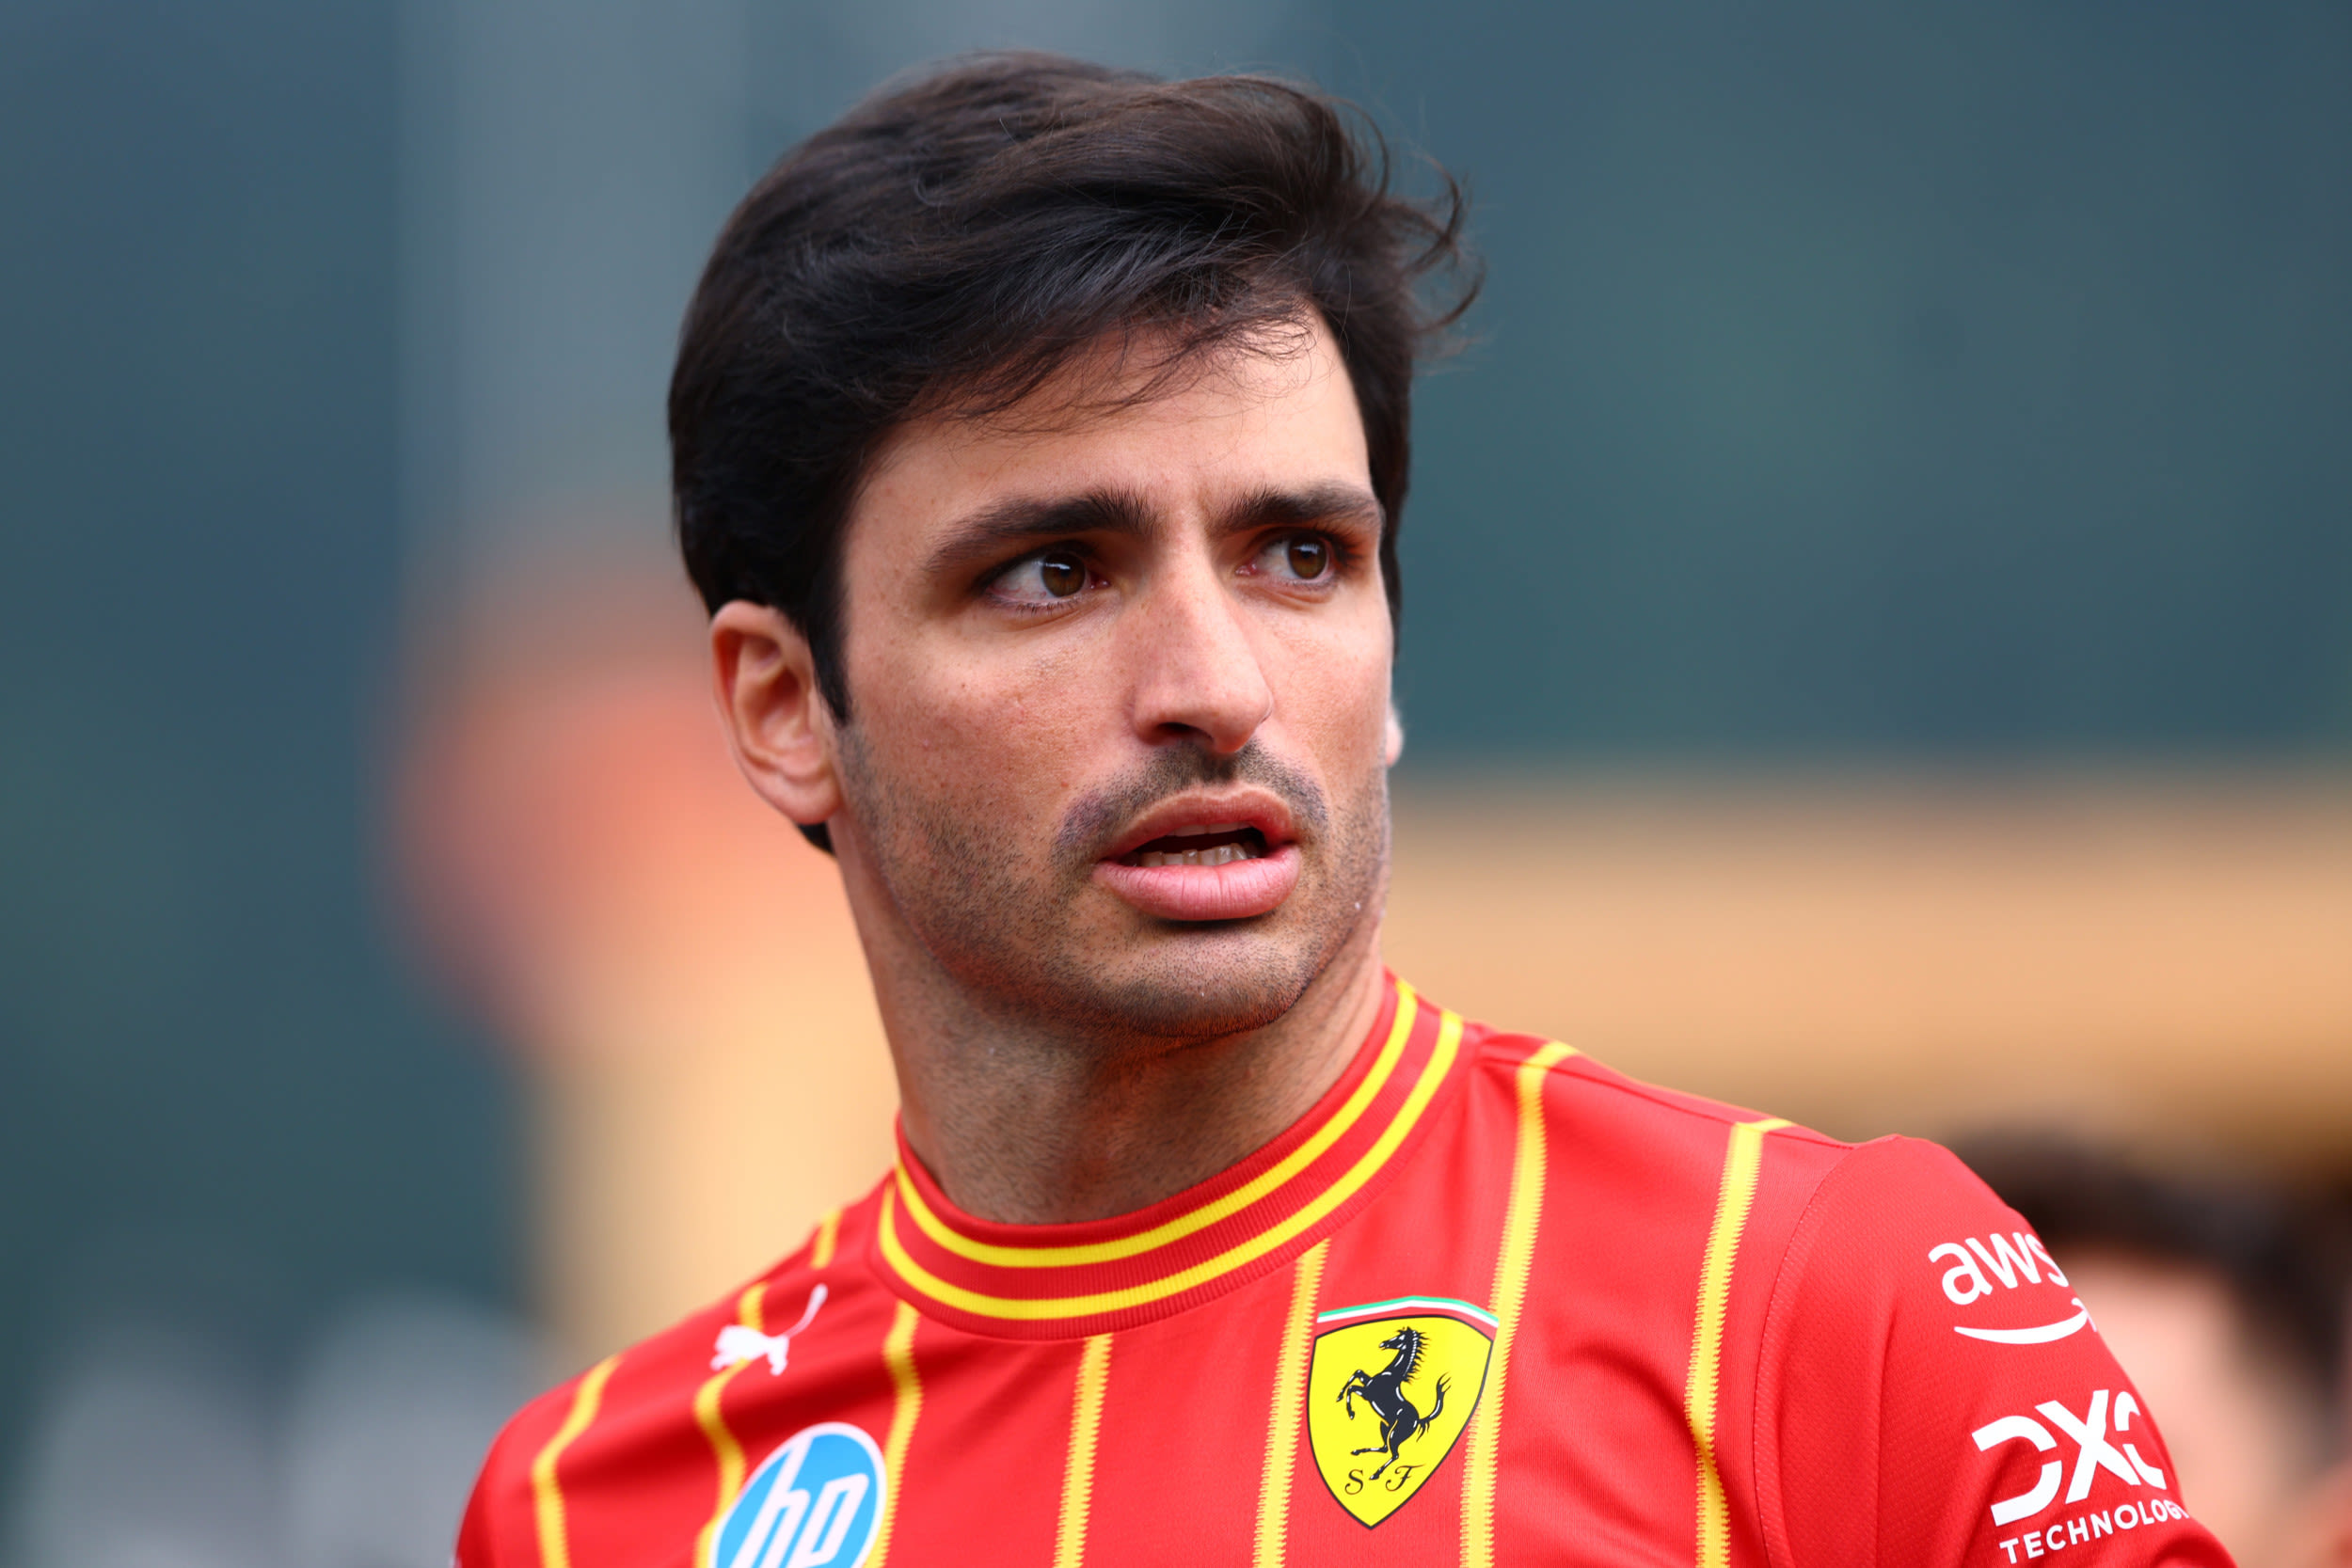 Carlos Sainz Reveals Ferrari Exclusion After Charles Leclerc Friction